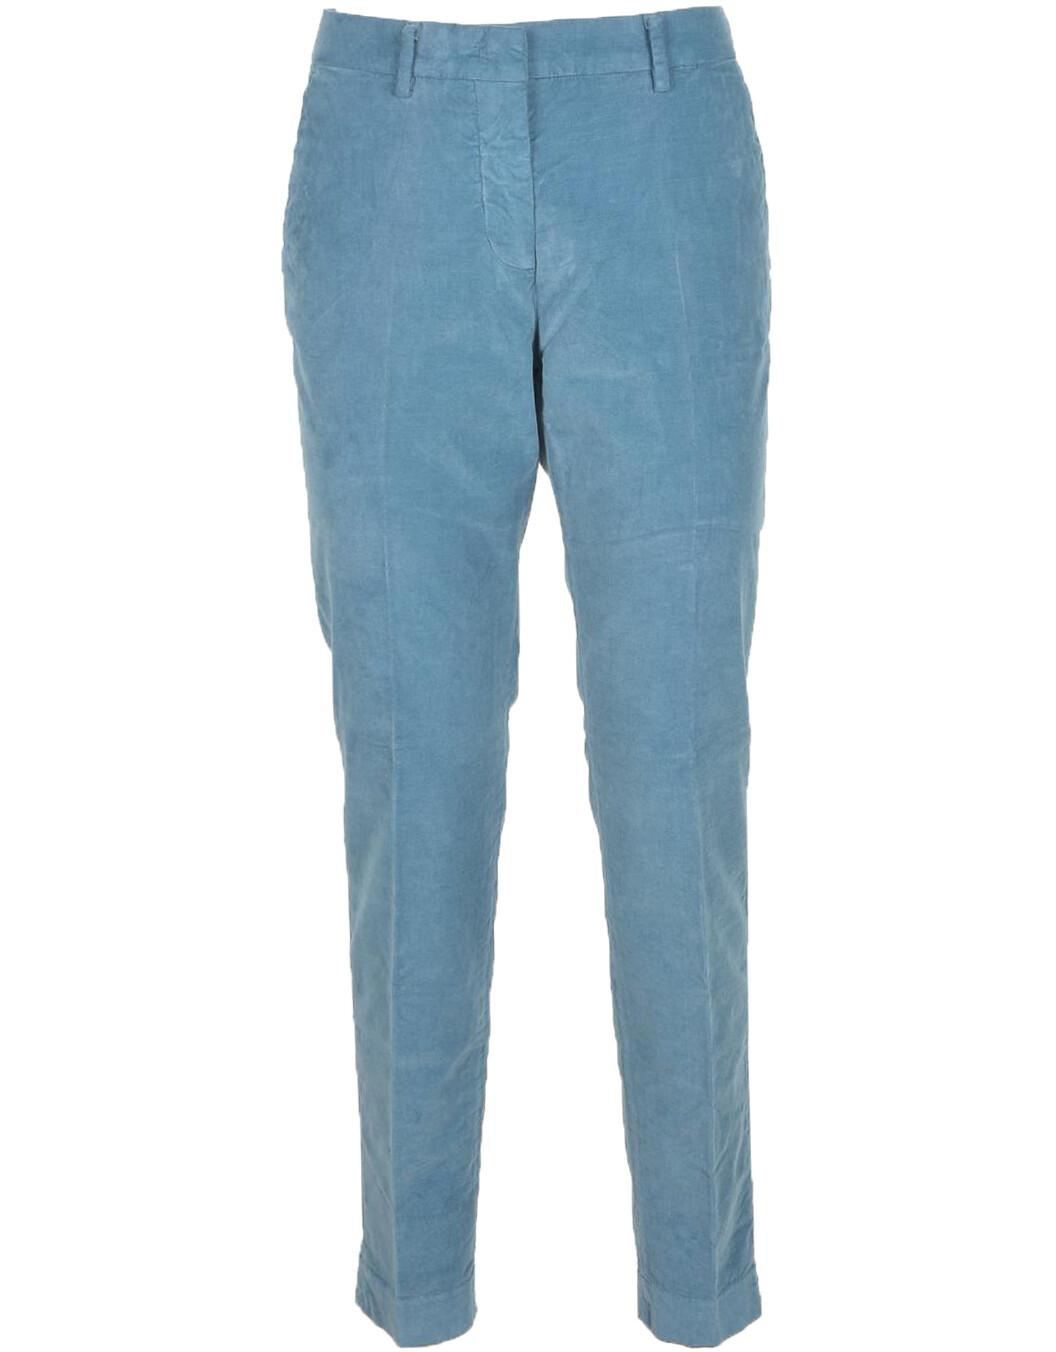 Women's Blue Pants